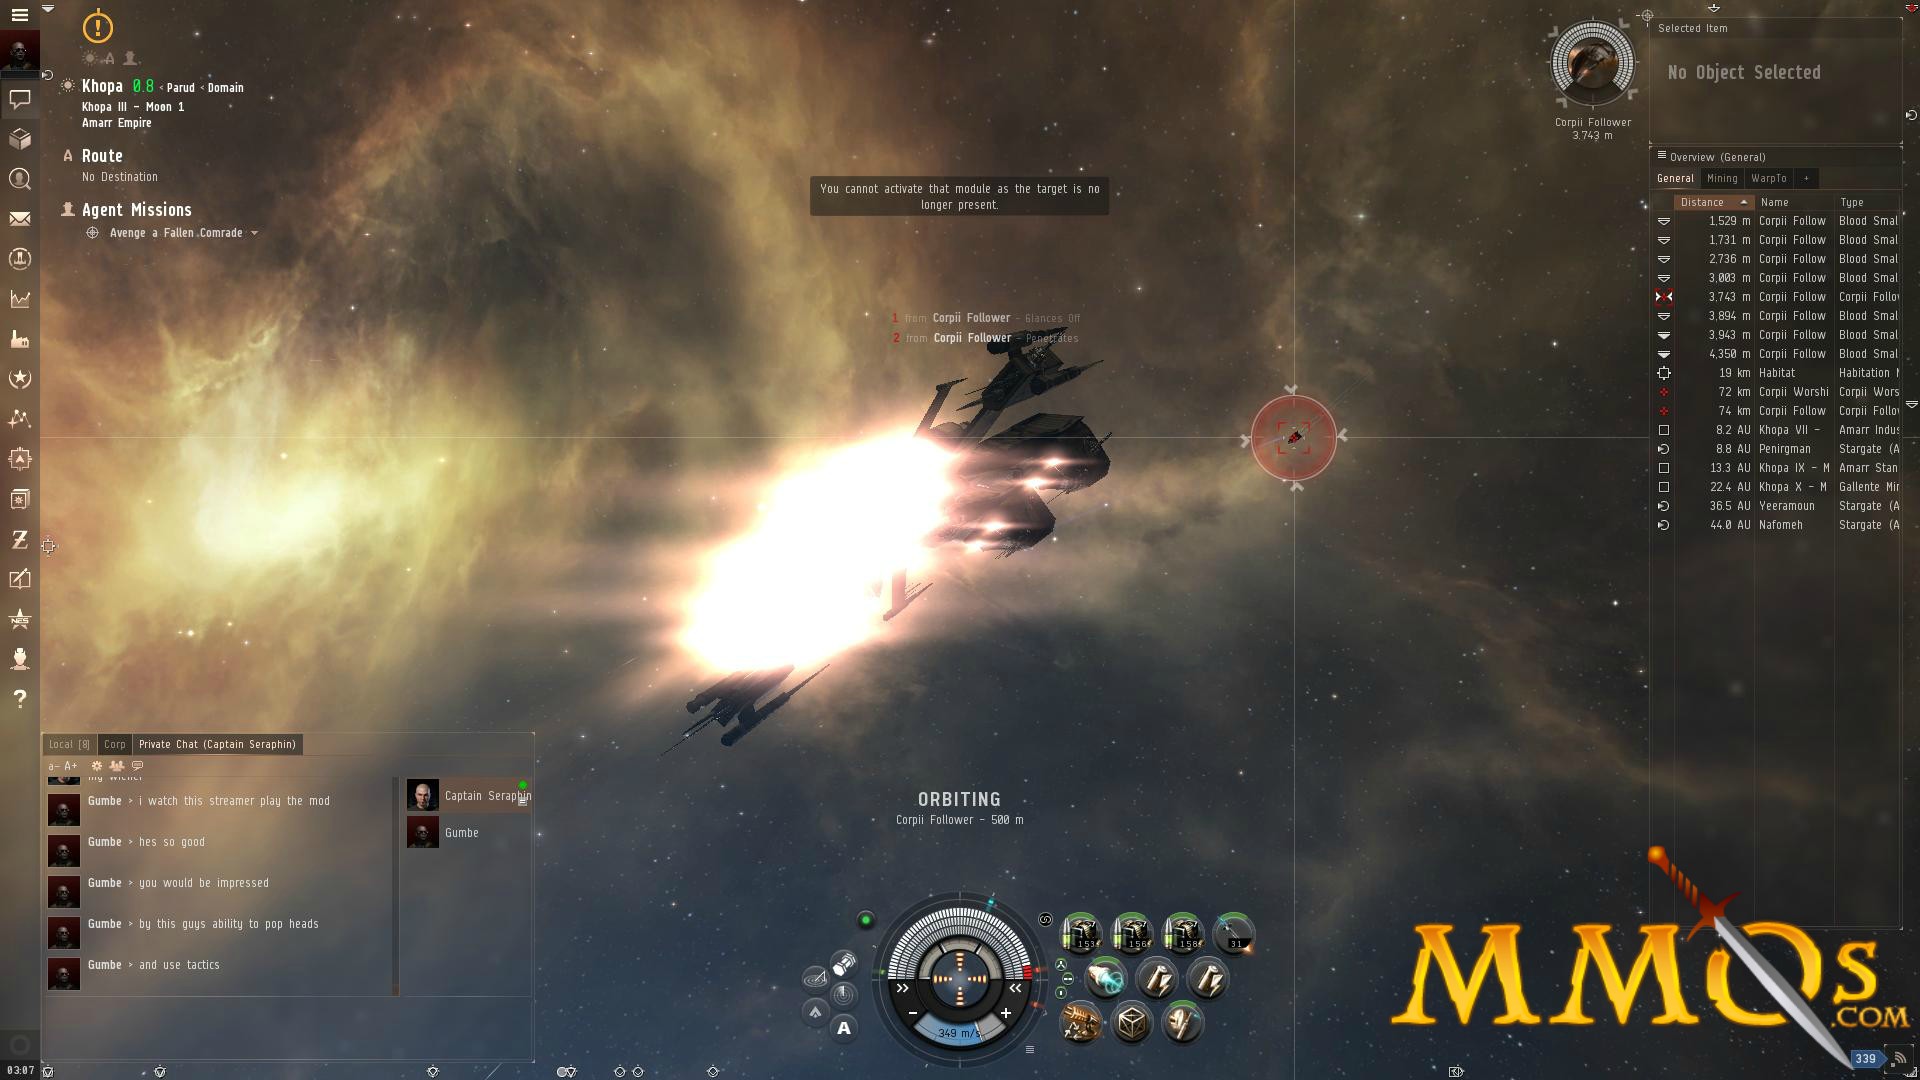 Eve Online - Gameplay 1 